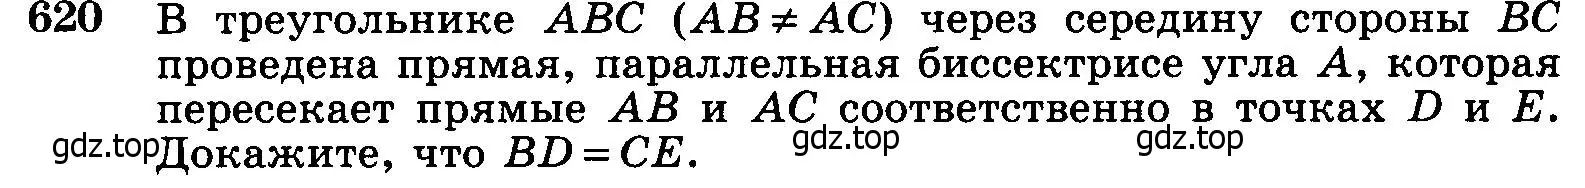 Условие номер 620 (страница 161) гдз по геометрии 7-9 класс Атанасян, Бутузов, учебник